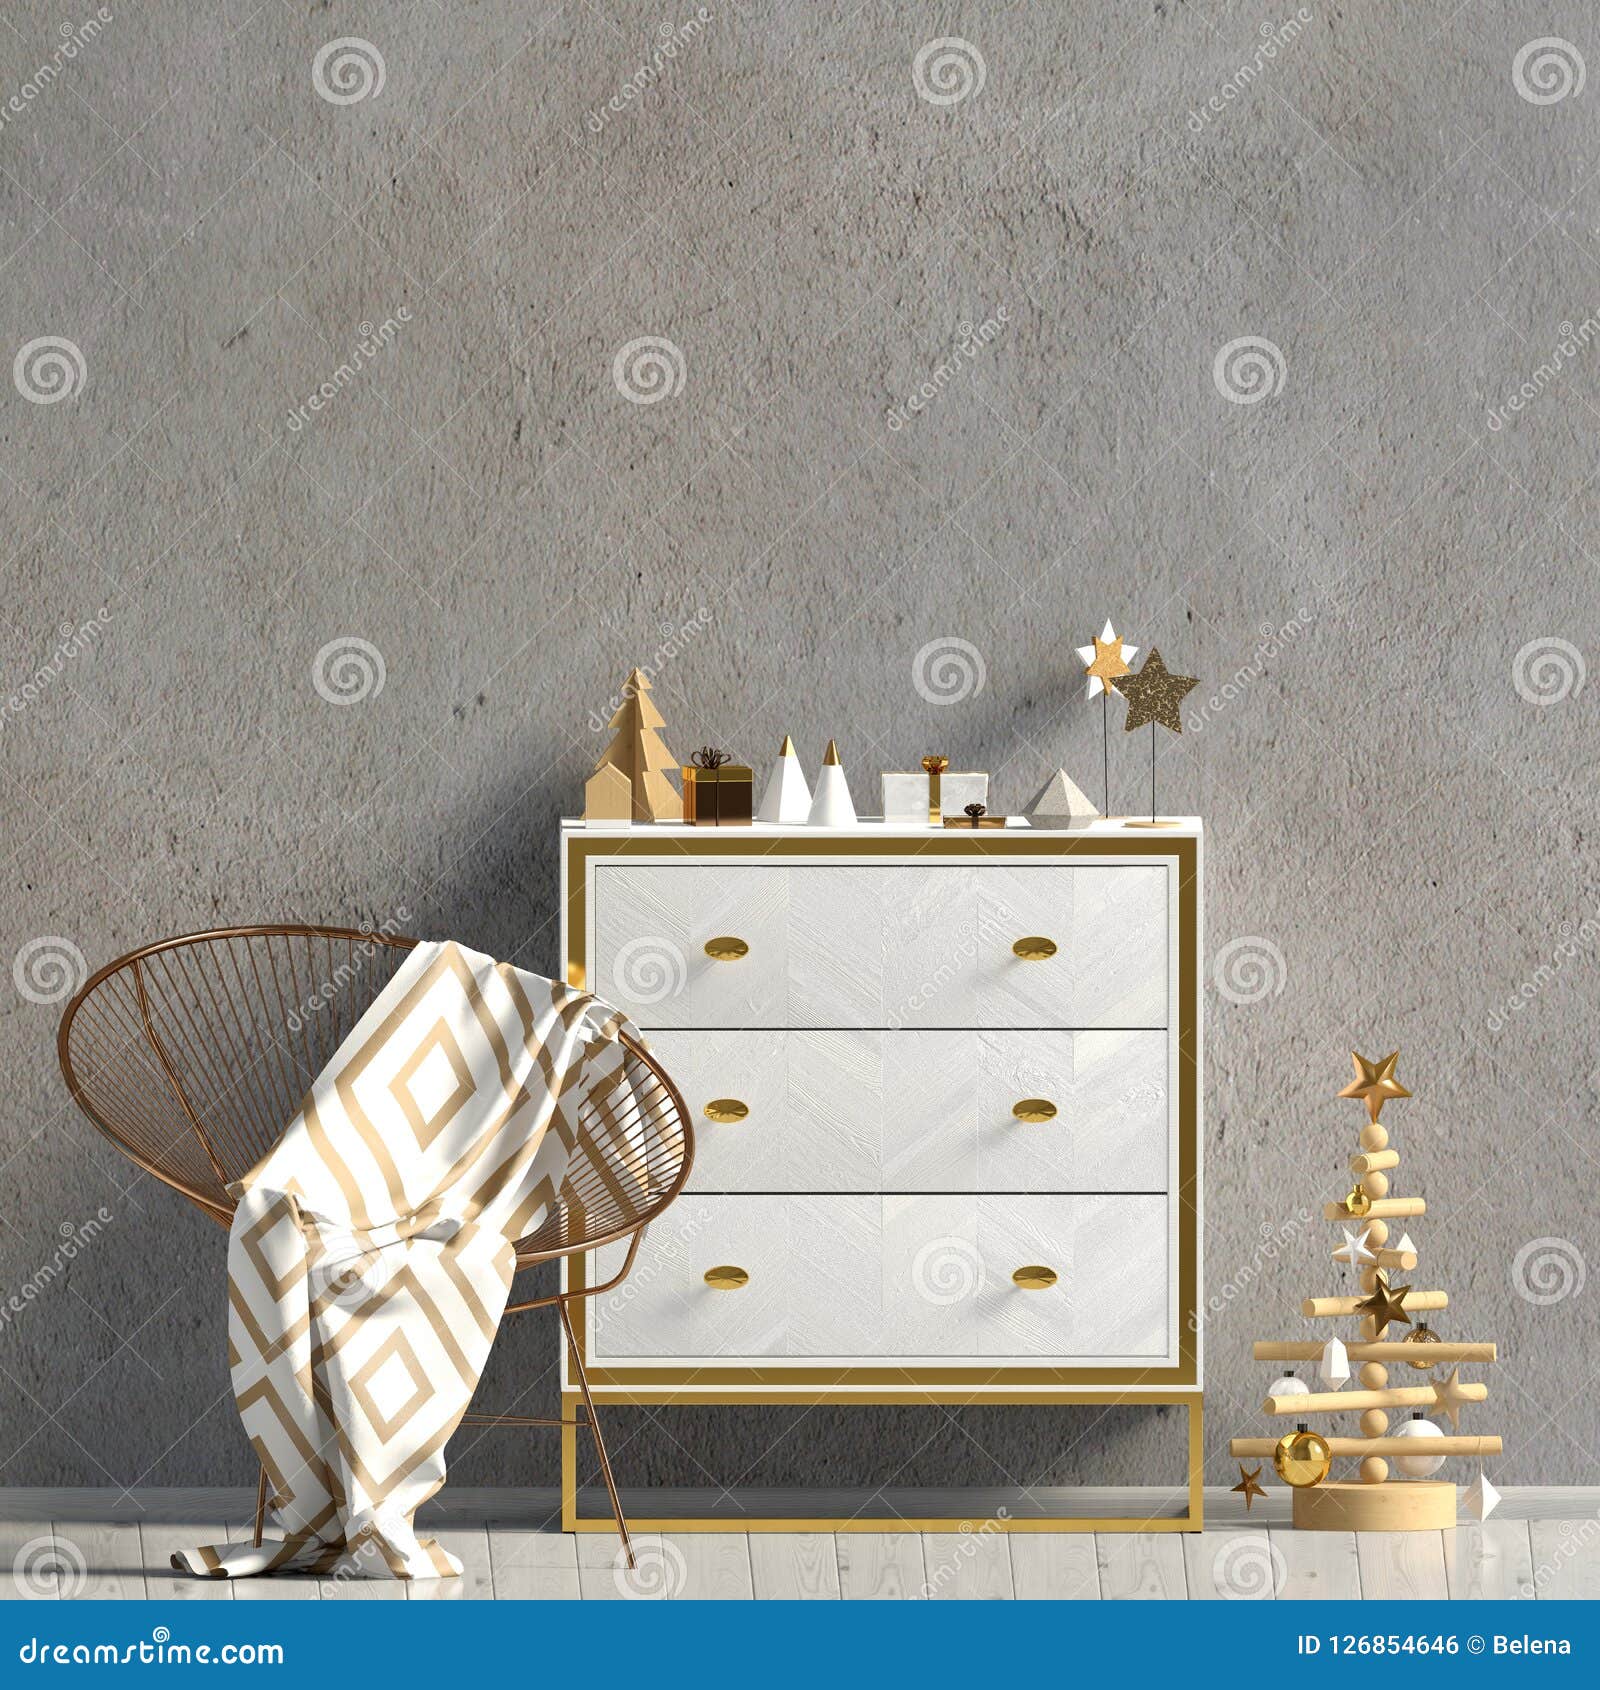 Modern Christmas Interior With Dresser Scandinavian Style Wall